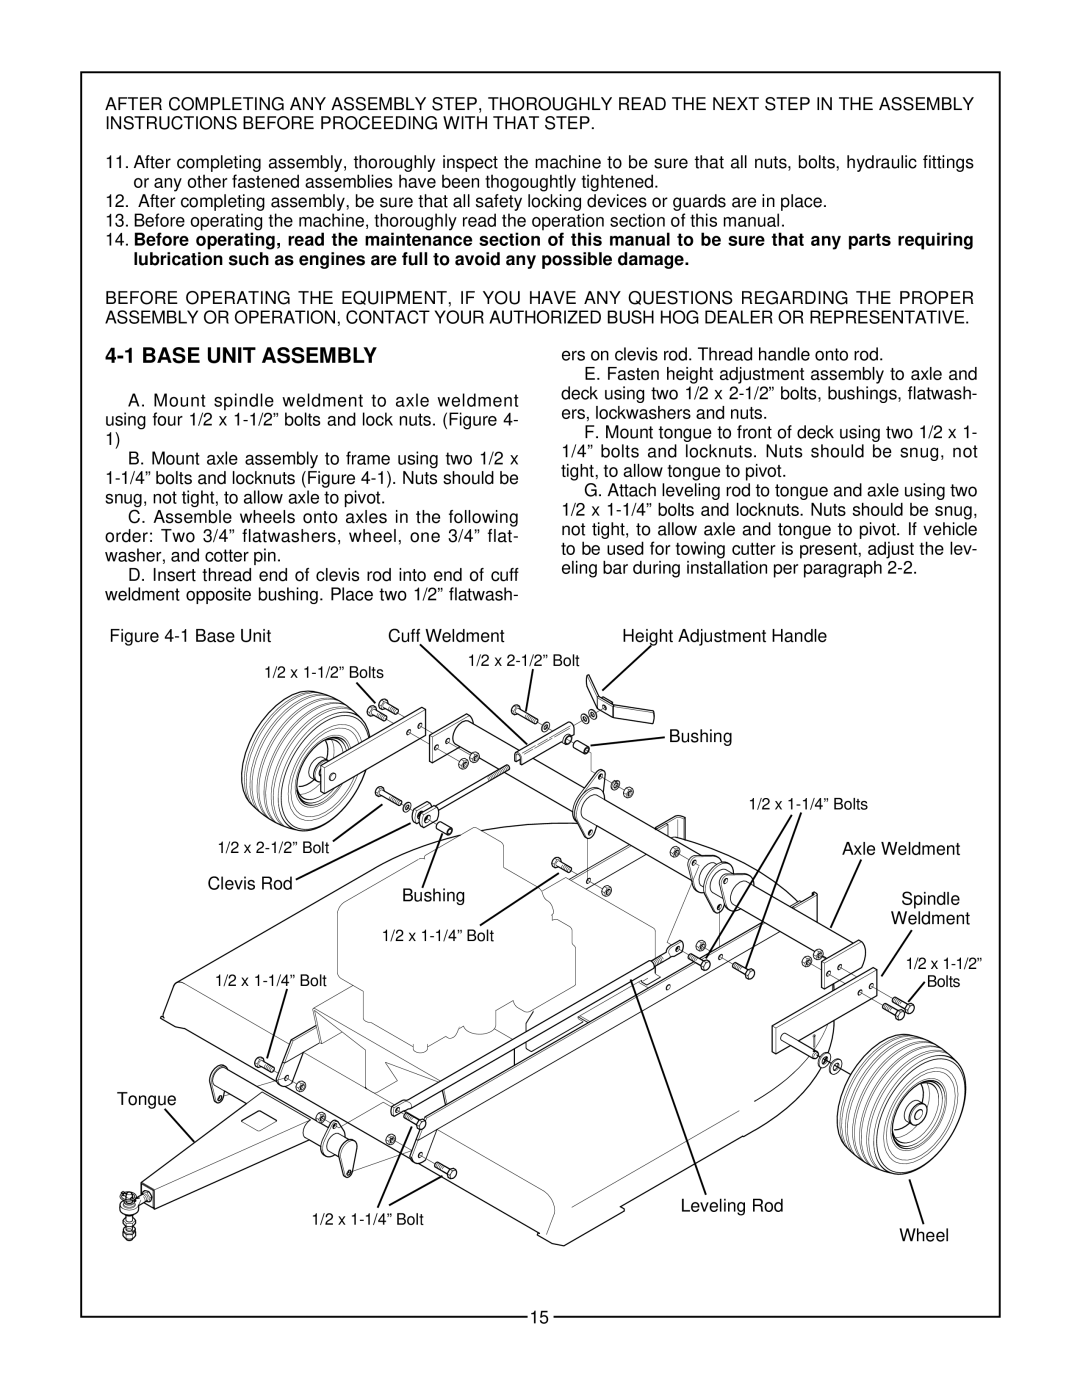 Bush Hog GT 48 manual Base Unit Assembly 